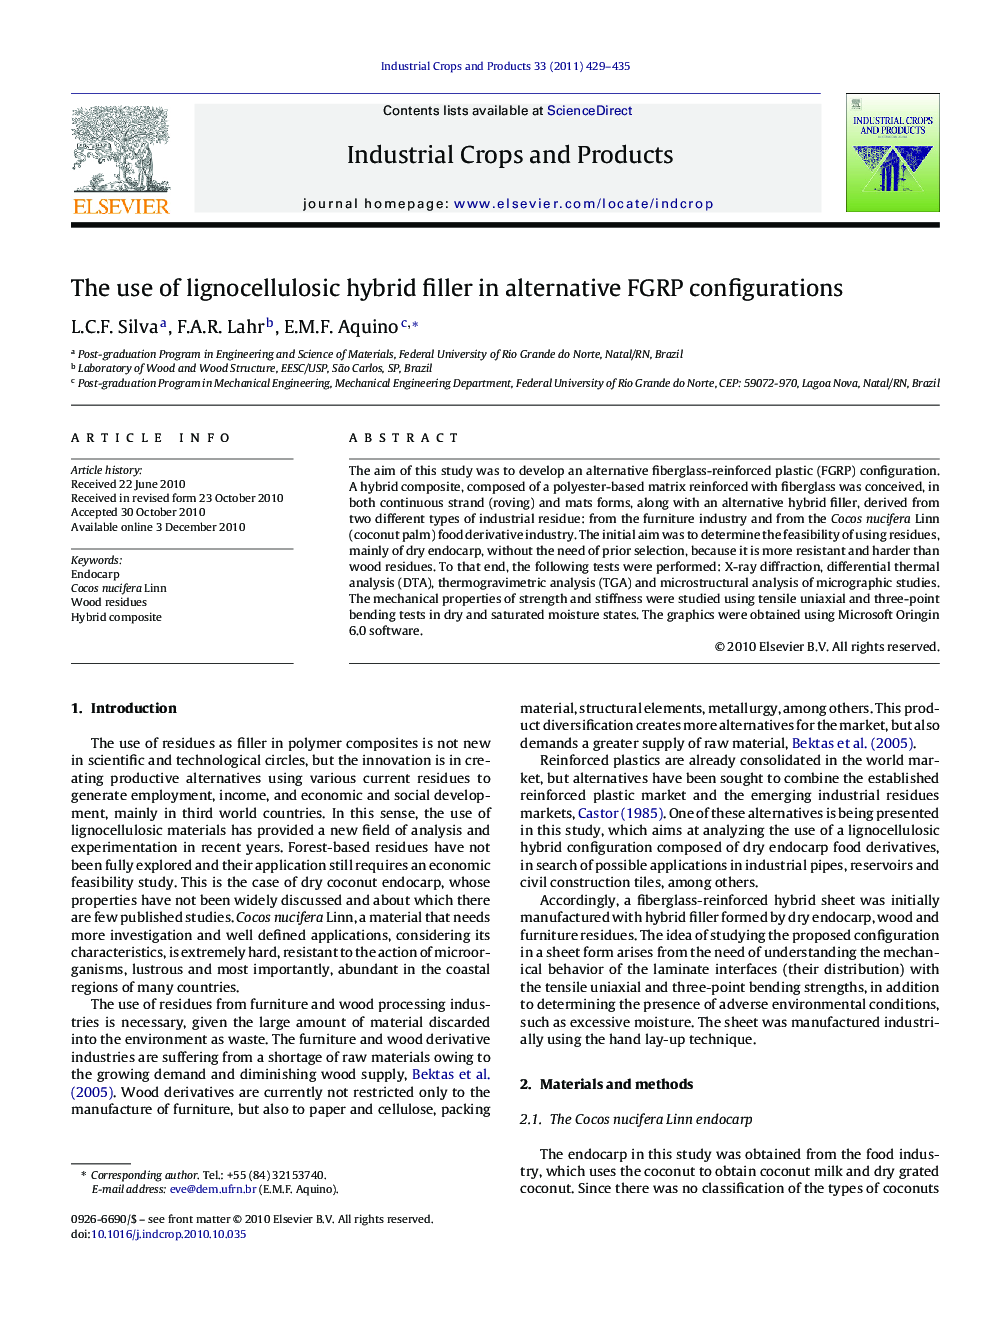 The use of lignocellulosic hybrid filler in alternative FGRP configurations